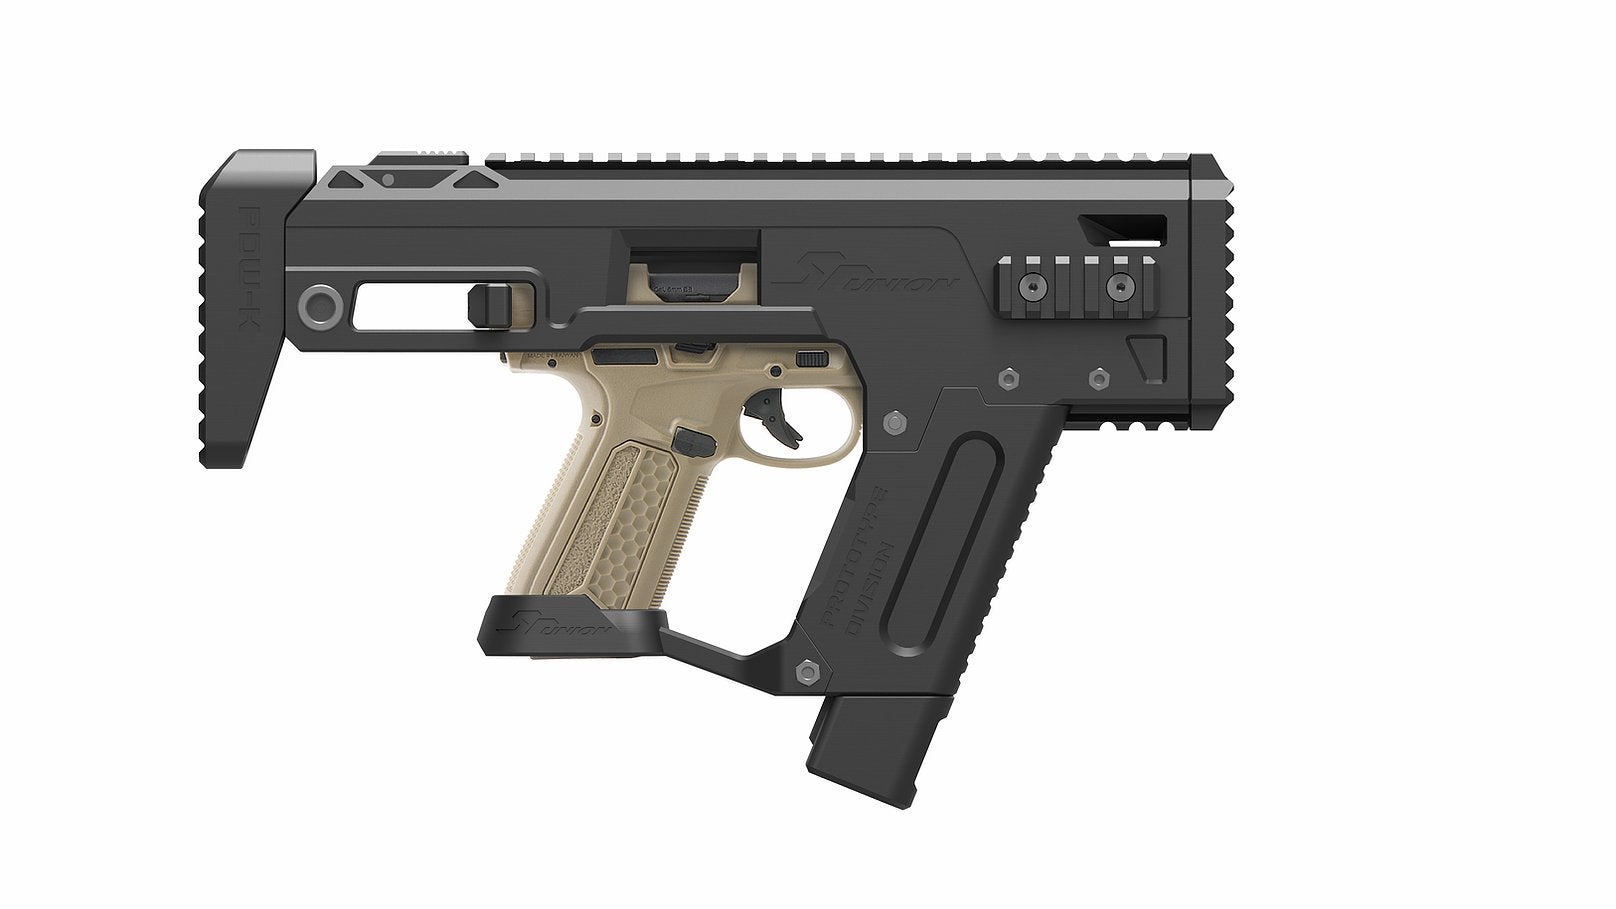 SRU GLOCK Carbine PDW Kit for AAP01 GBB Gas Pistol